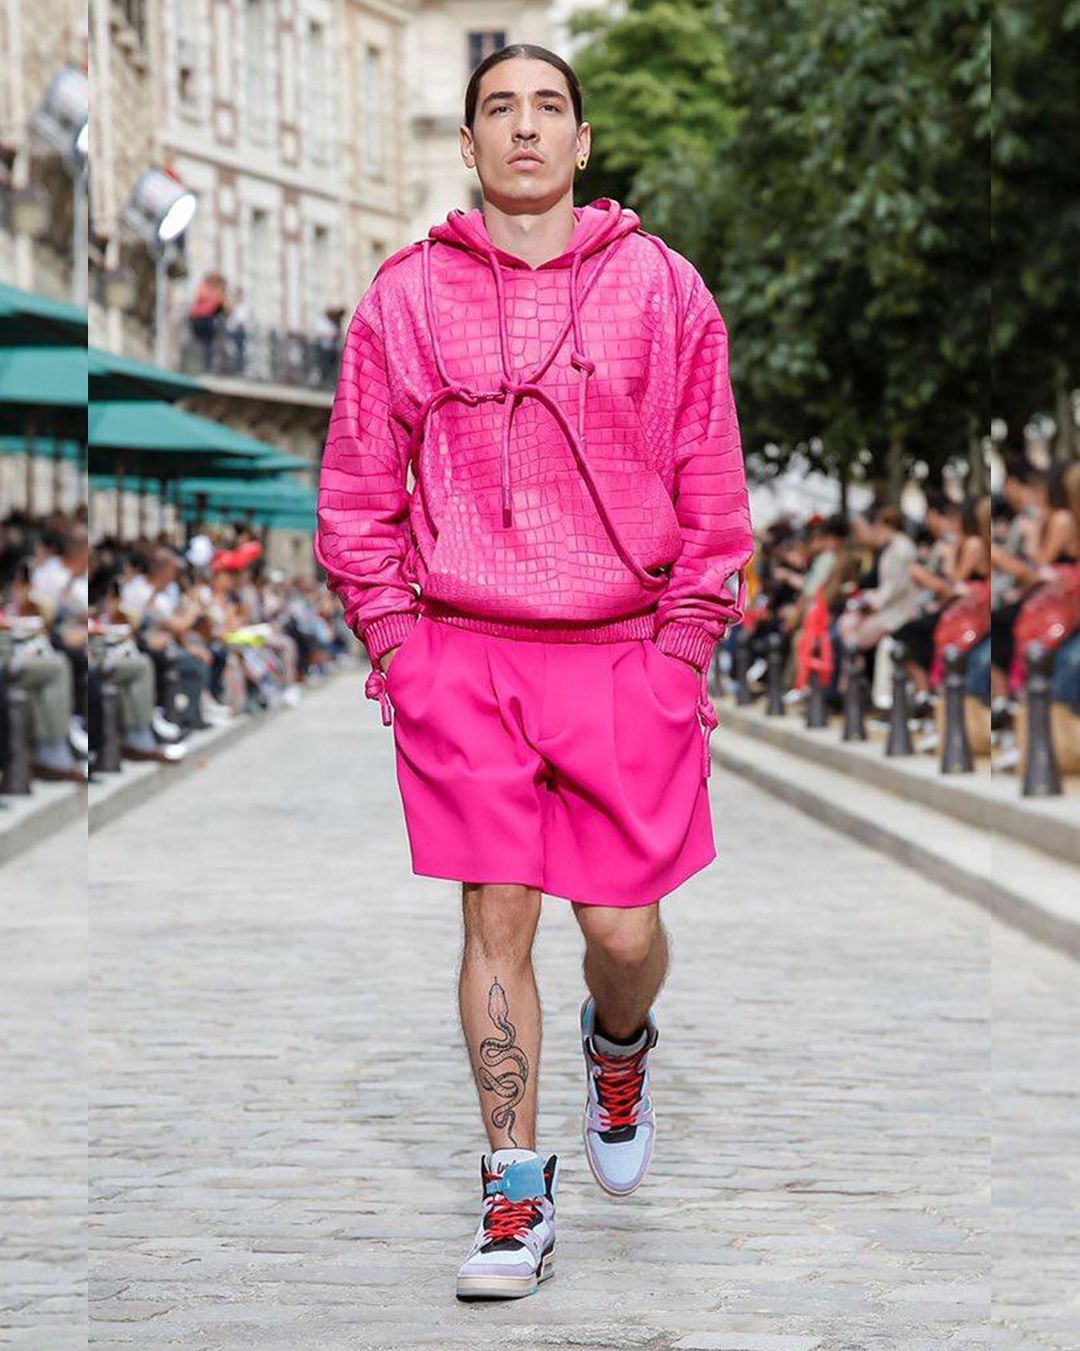 7 Stylish Football Players Making Waves In Fashion | Fashion